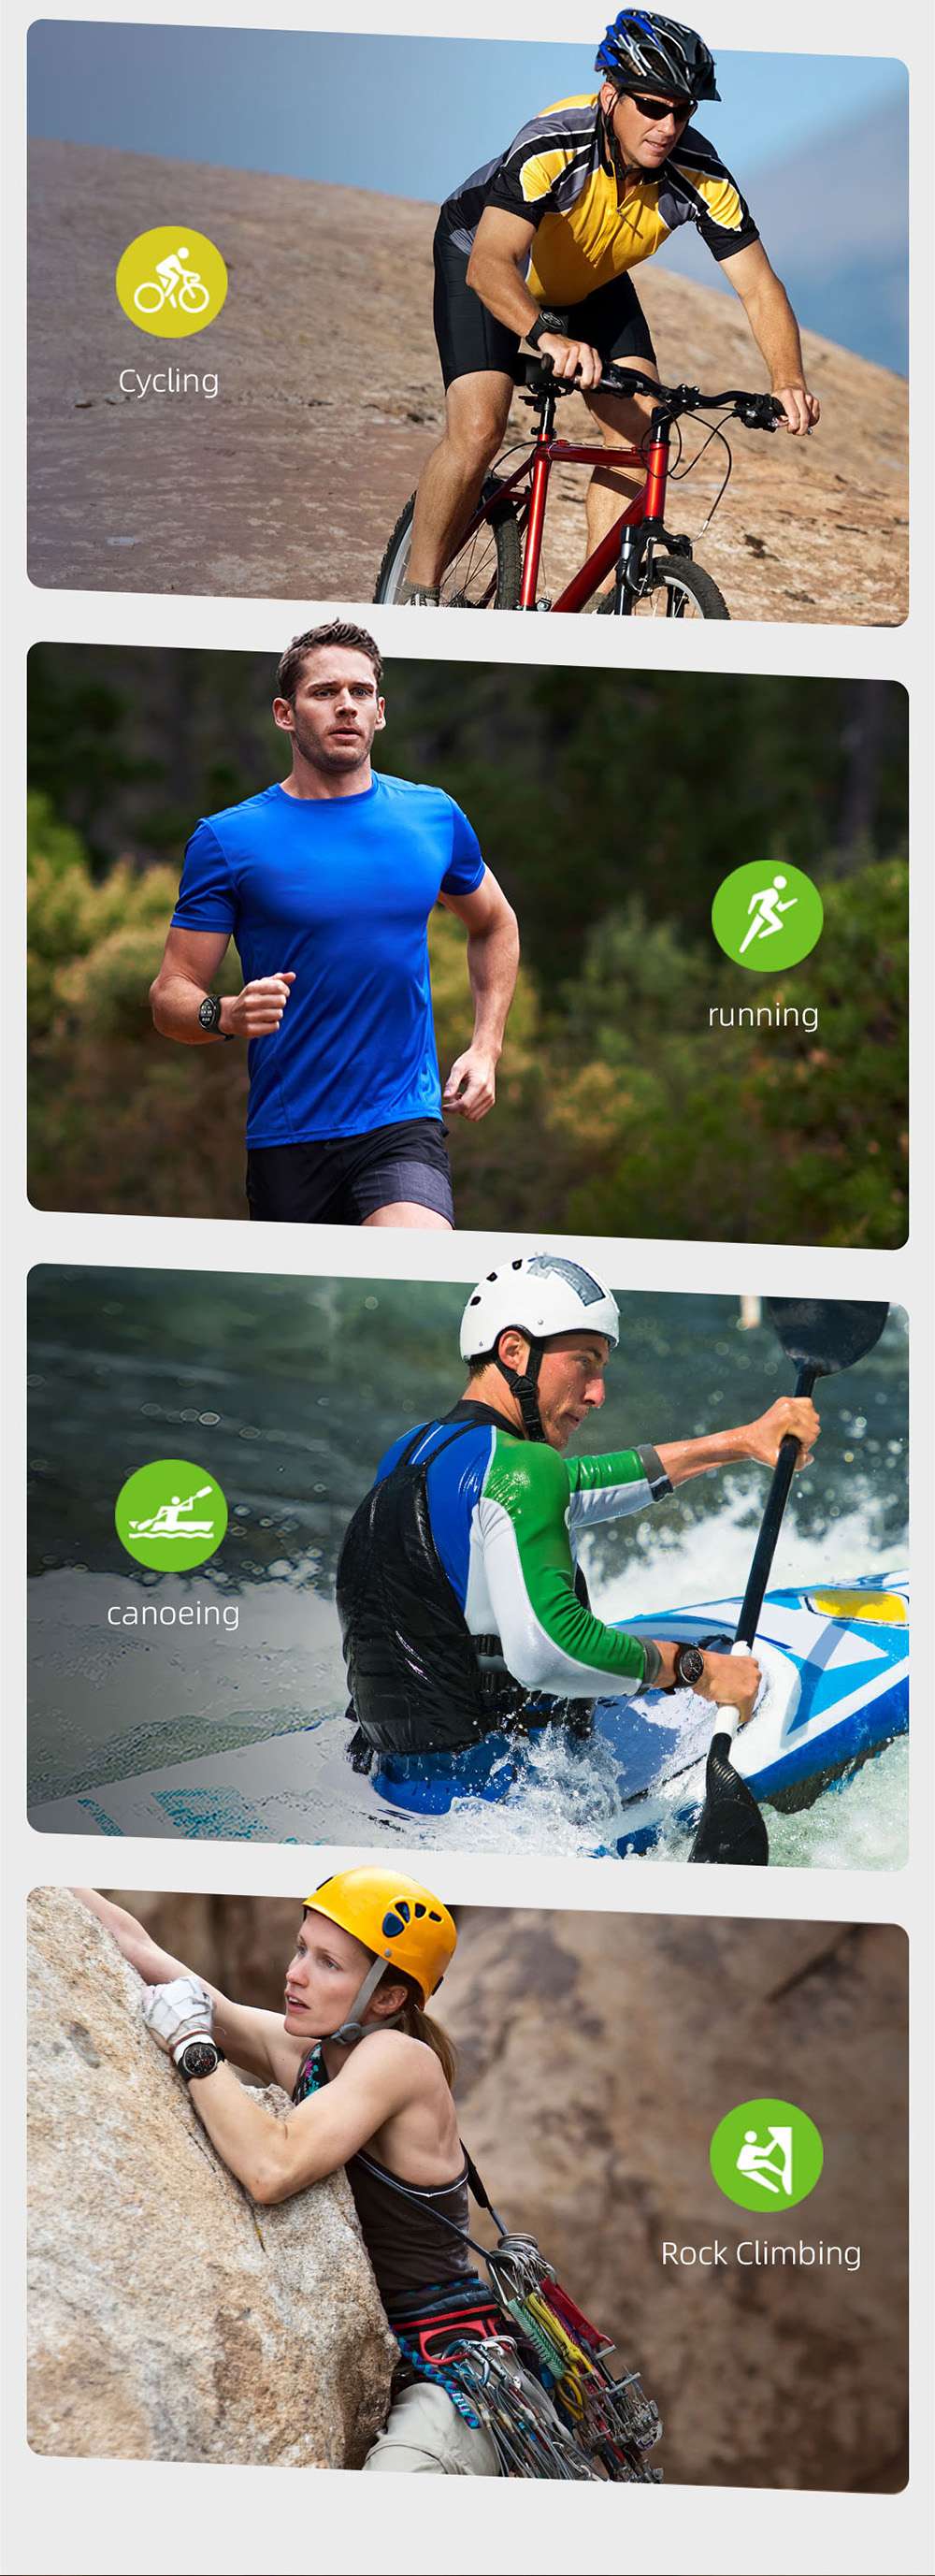 Mibro GS Smartwatch GPS Sports Watch, 1.43'' AMOLED HD Display, 24-day Ultra-long Battery Life, 70 Sports Modes